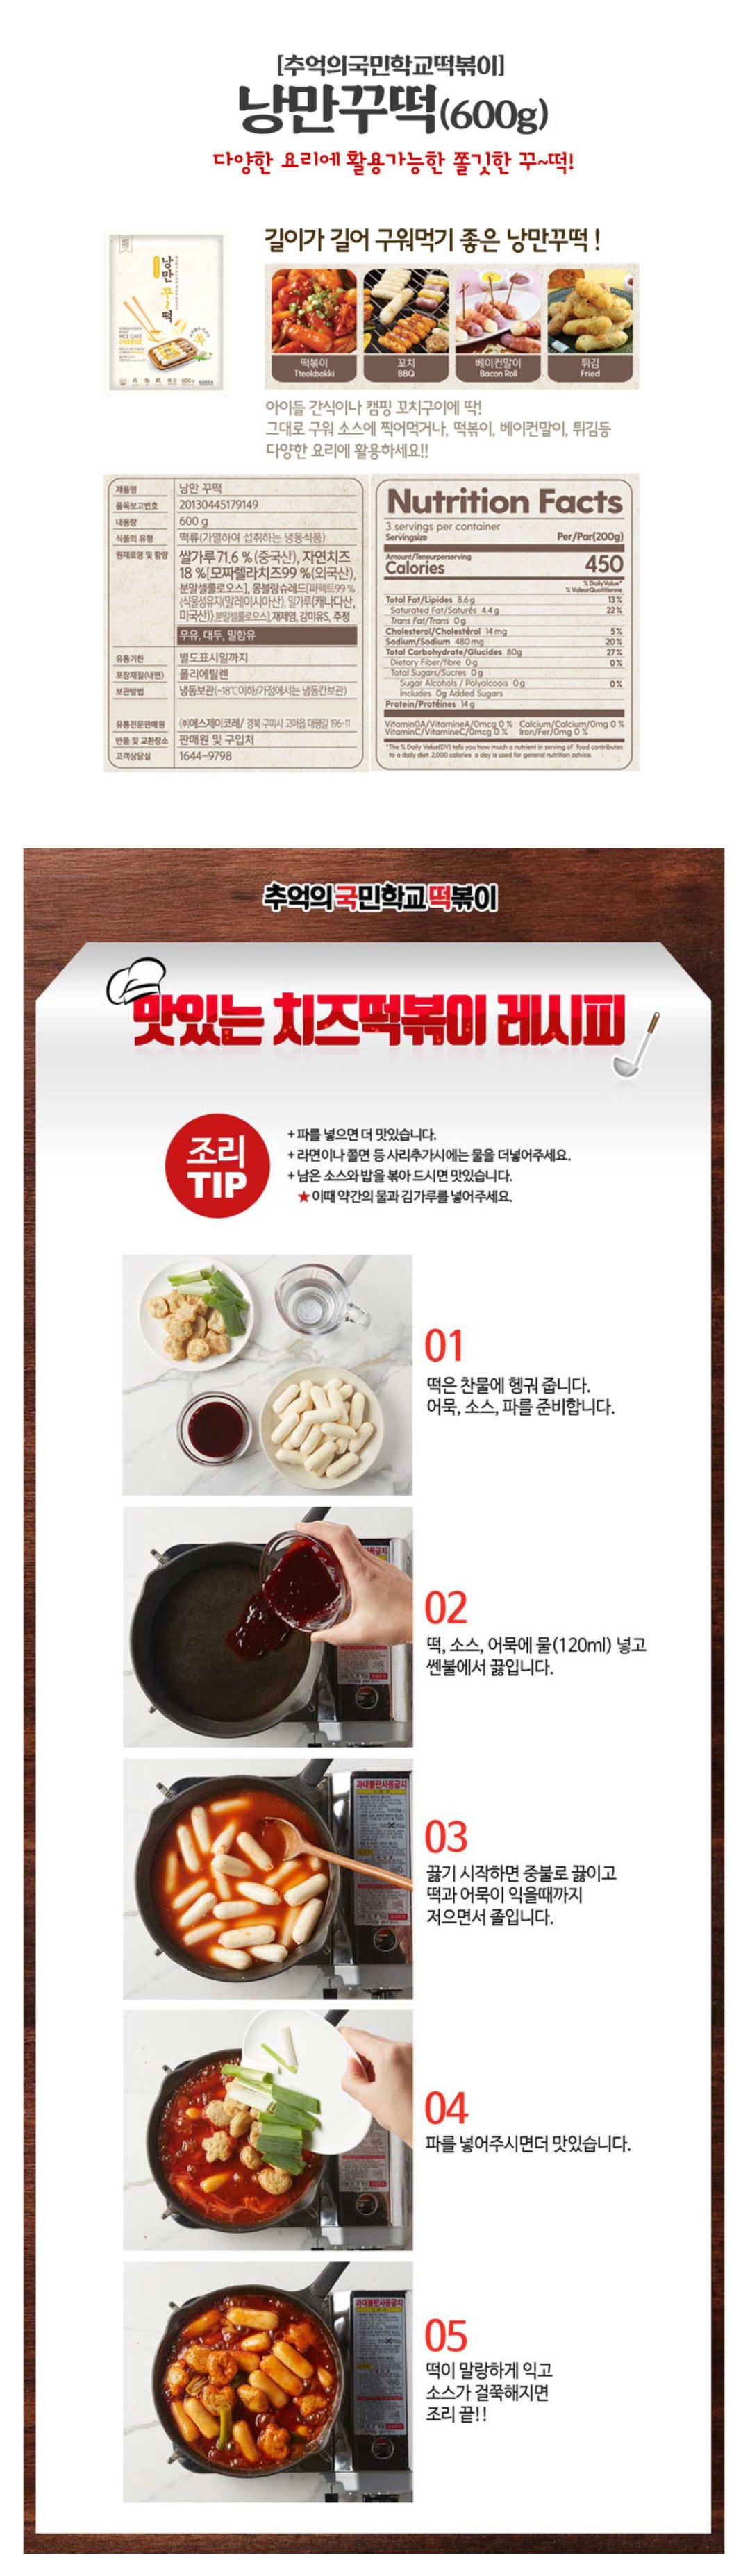 Bosong Rice Cake: Handmade rice cakes by Korean ajumma at $5 a box